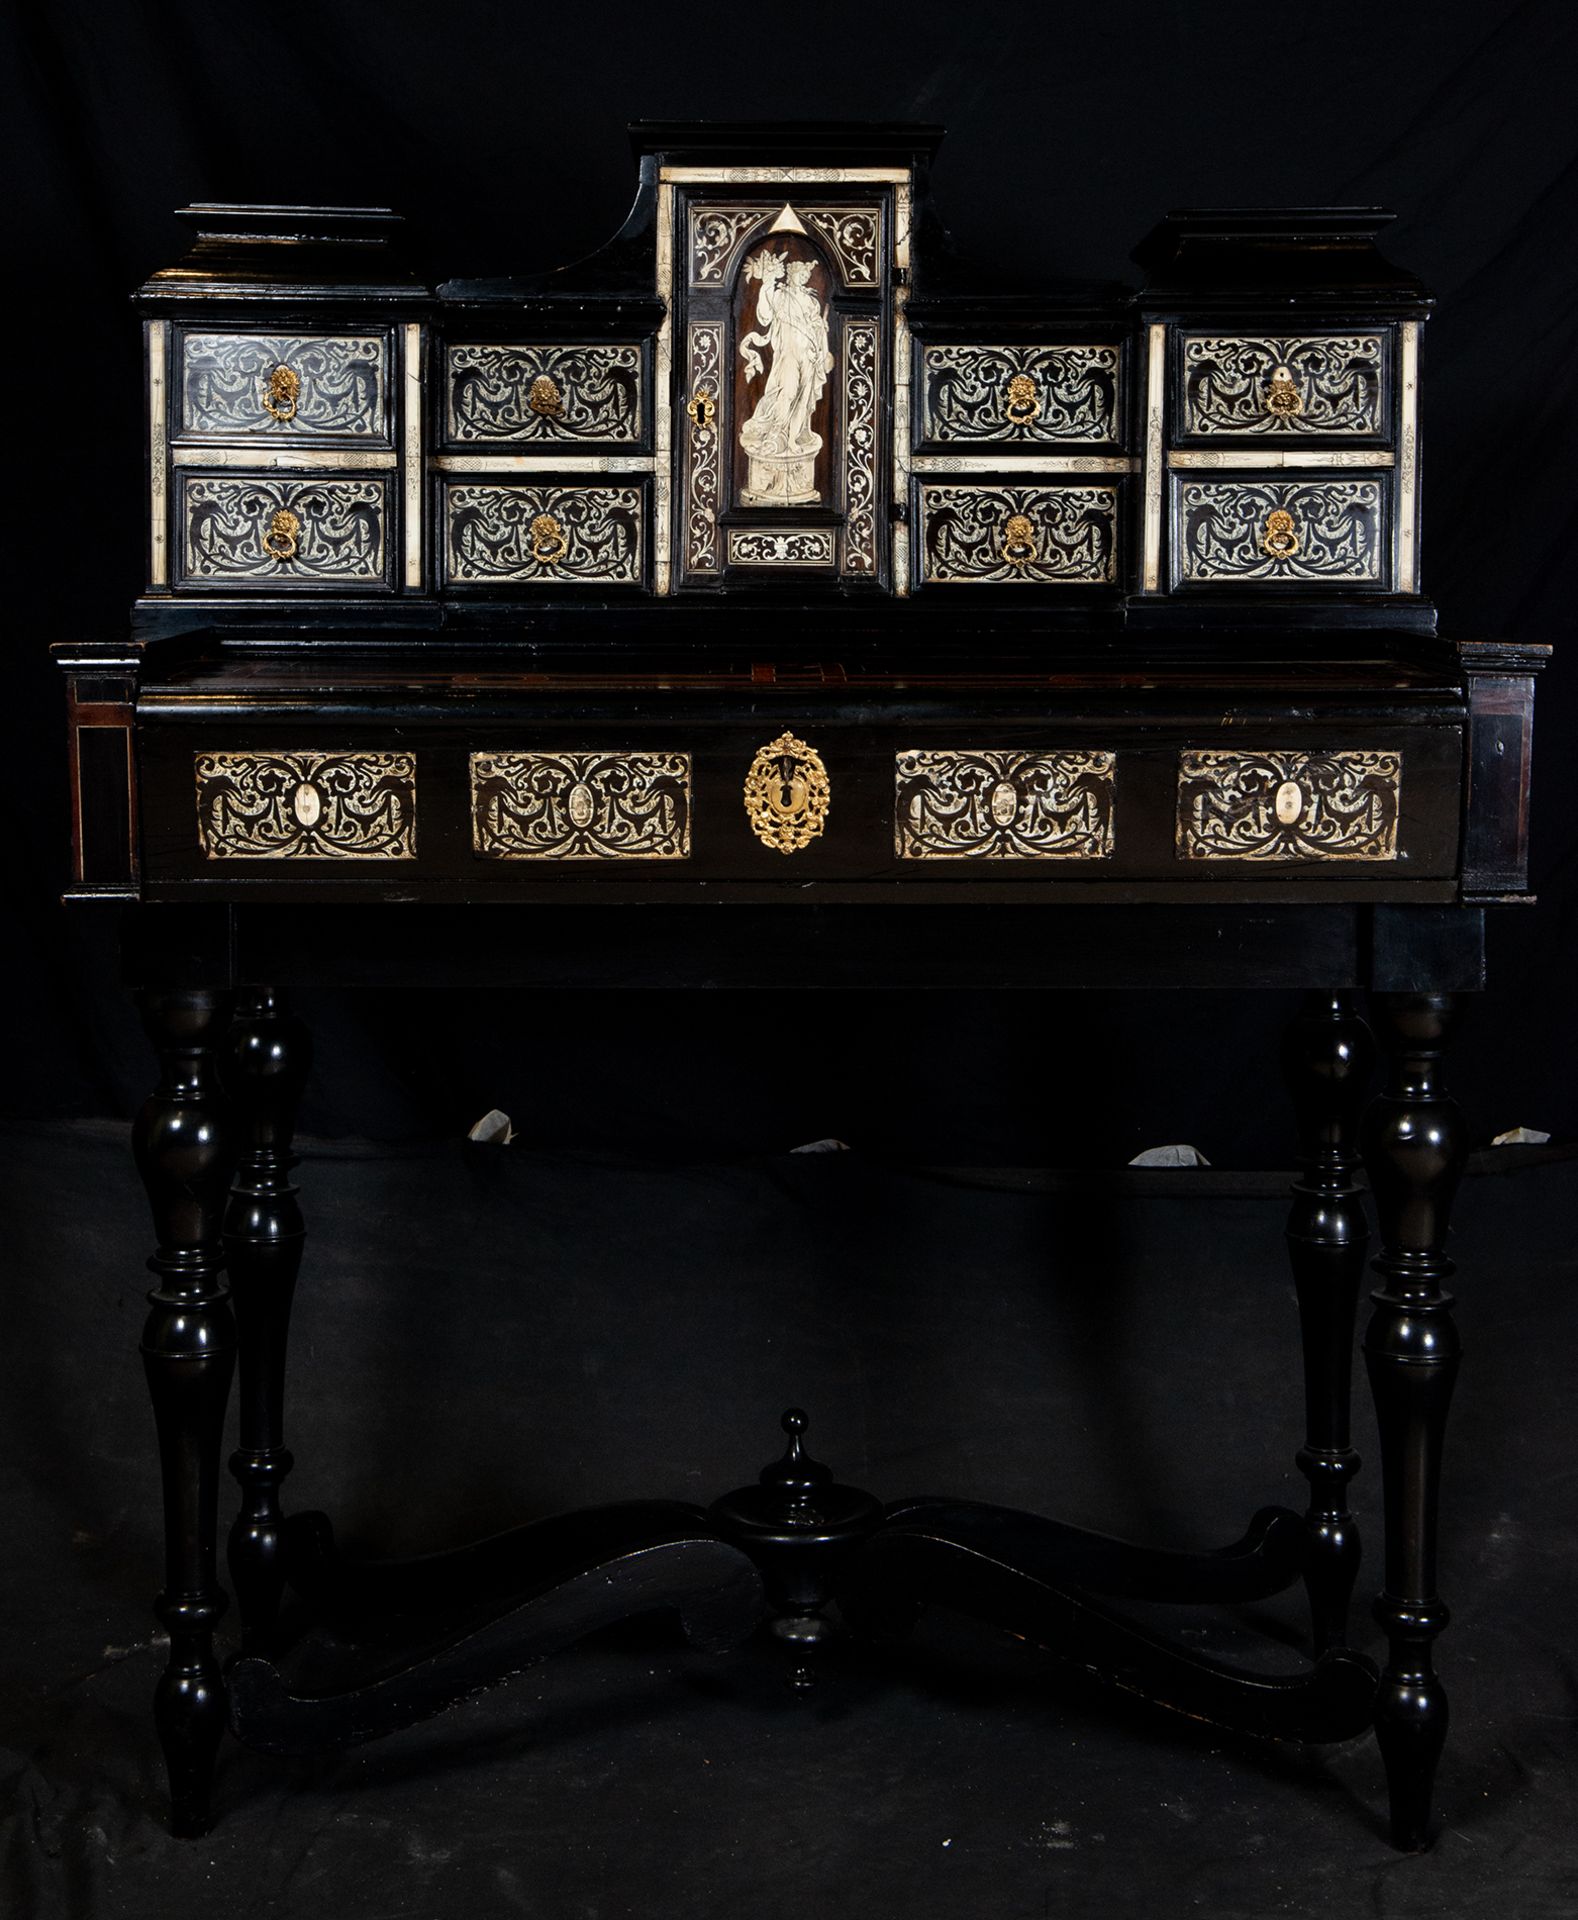 Important Florentine Desk in Ebonized Wood, Rosewood and bone inlays, 18th century Italian work